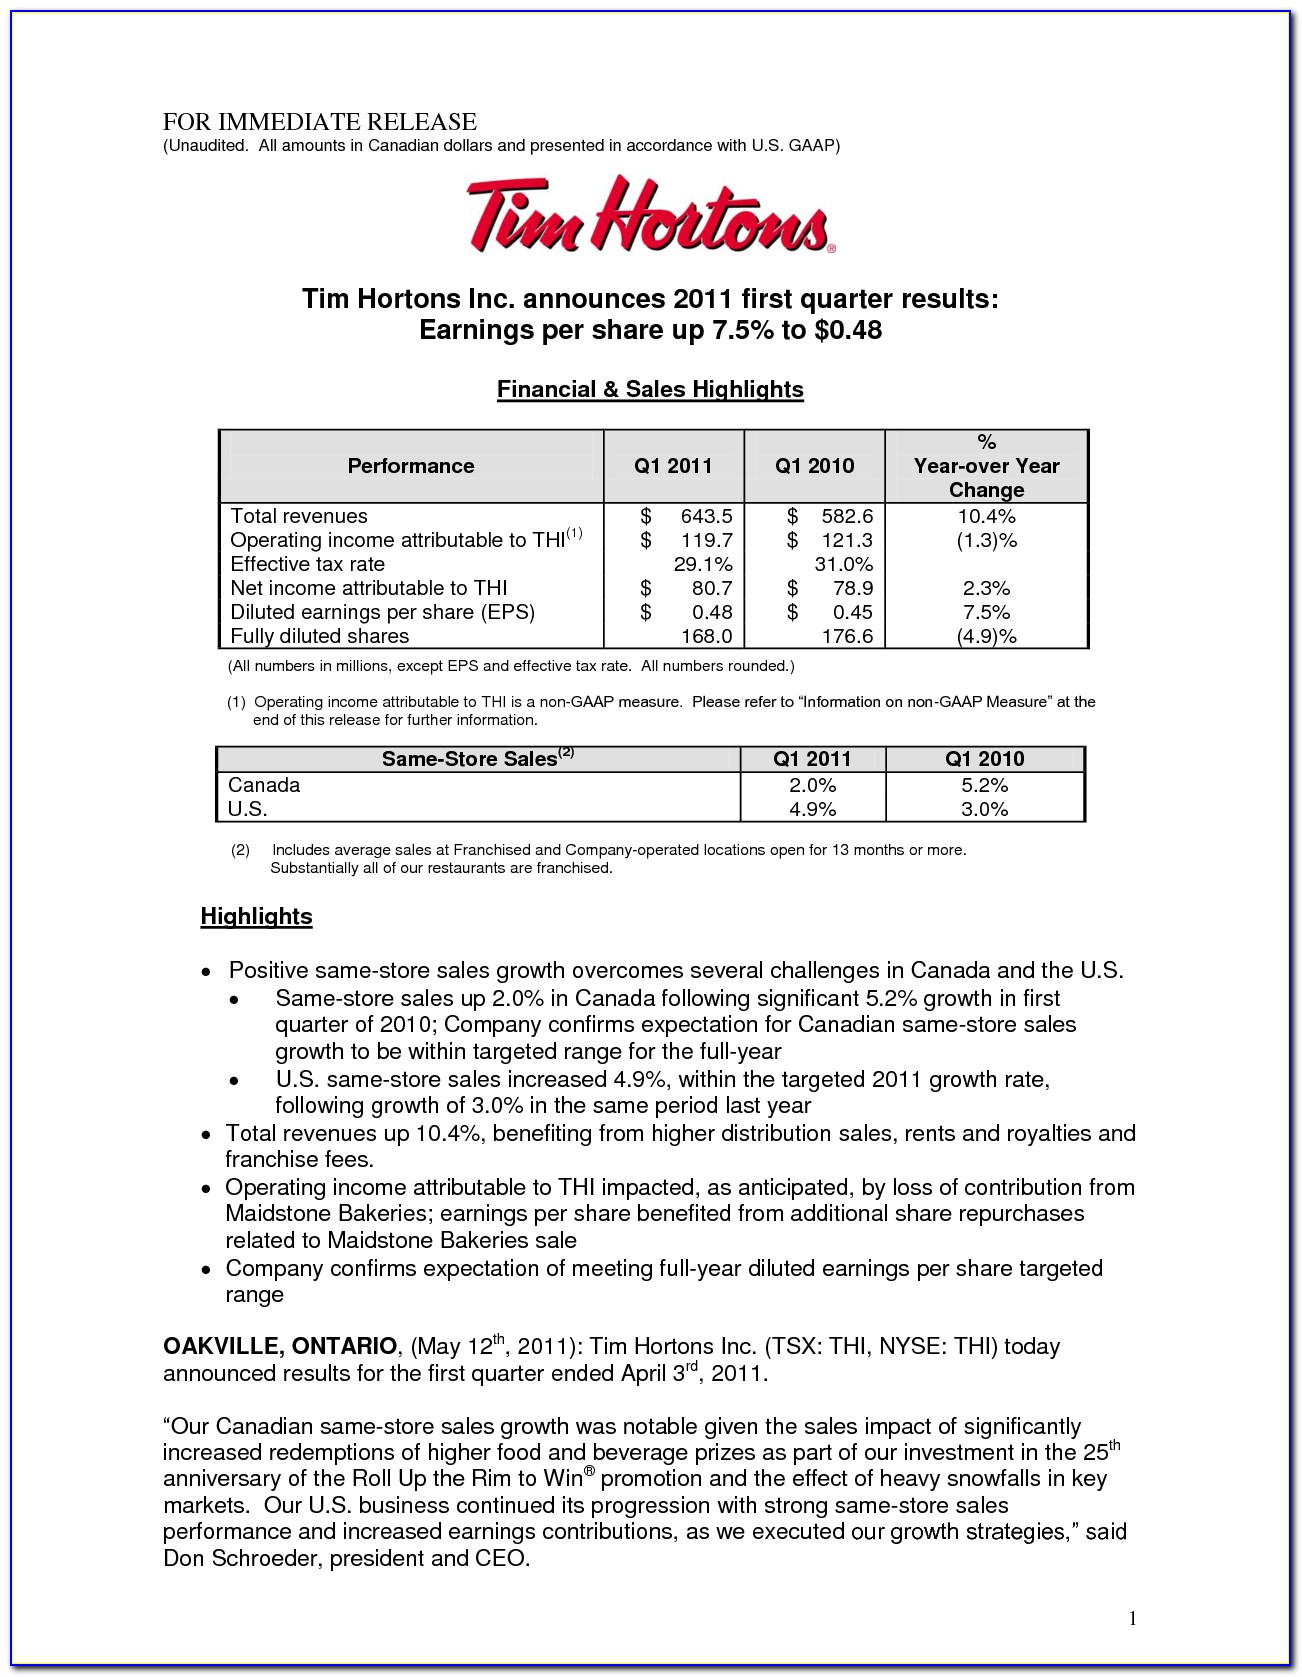 Tim Hortons Job Application Form Canada